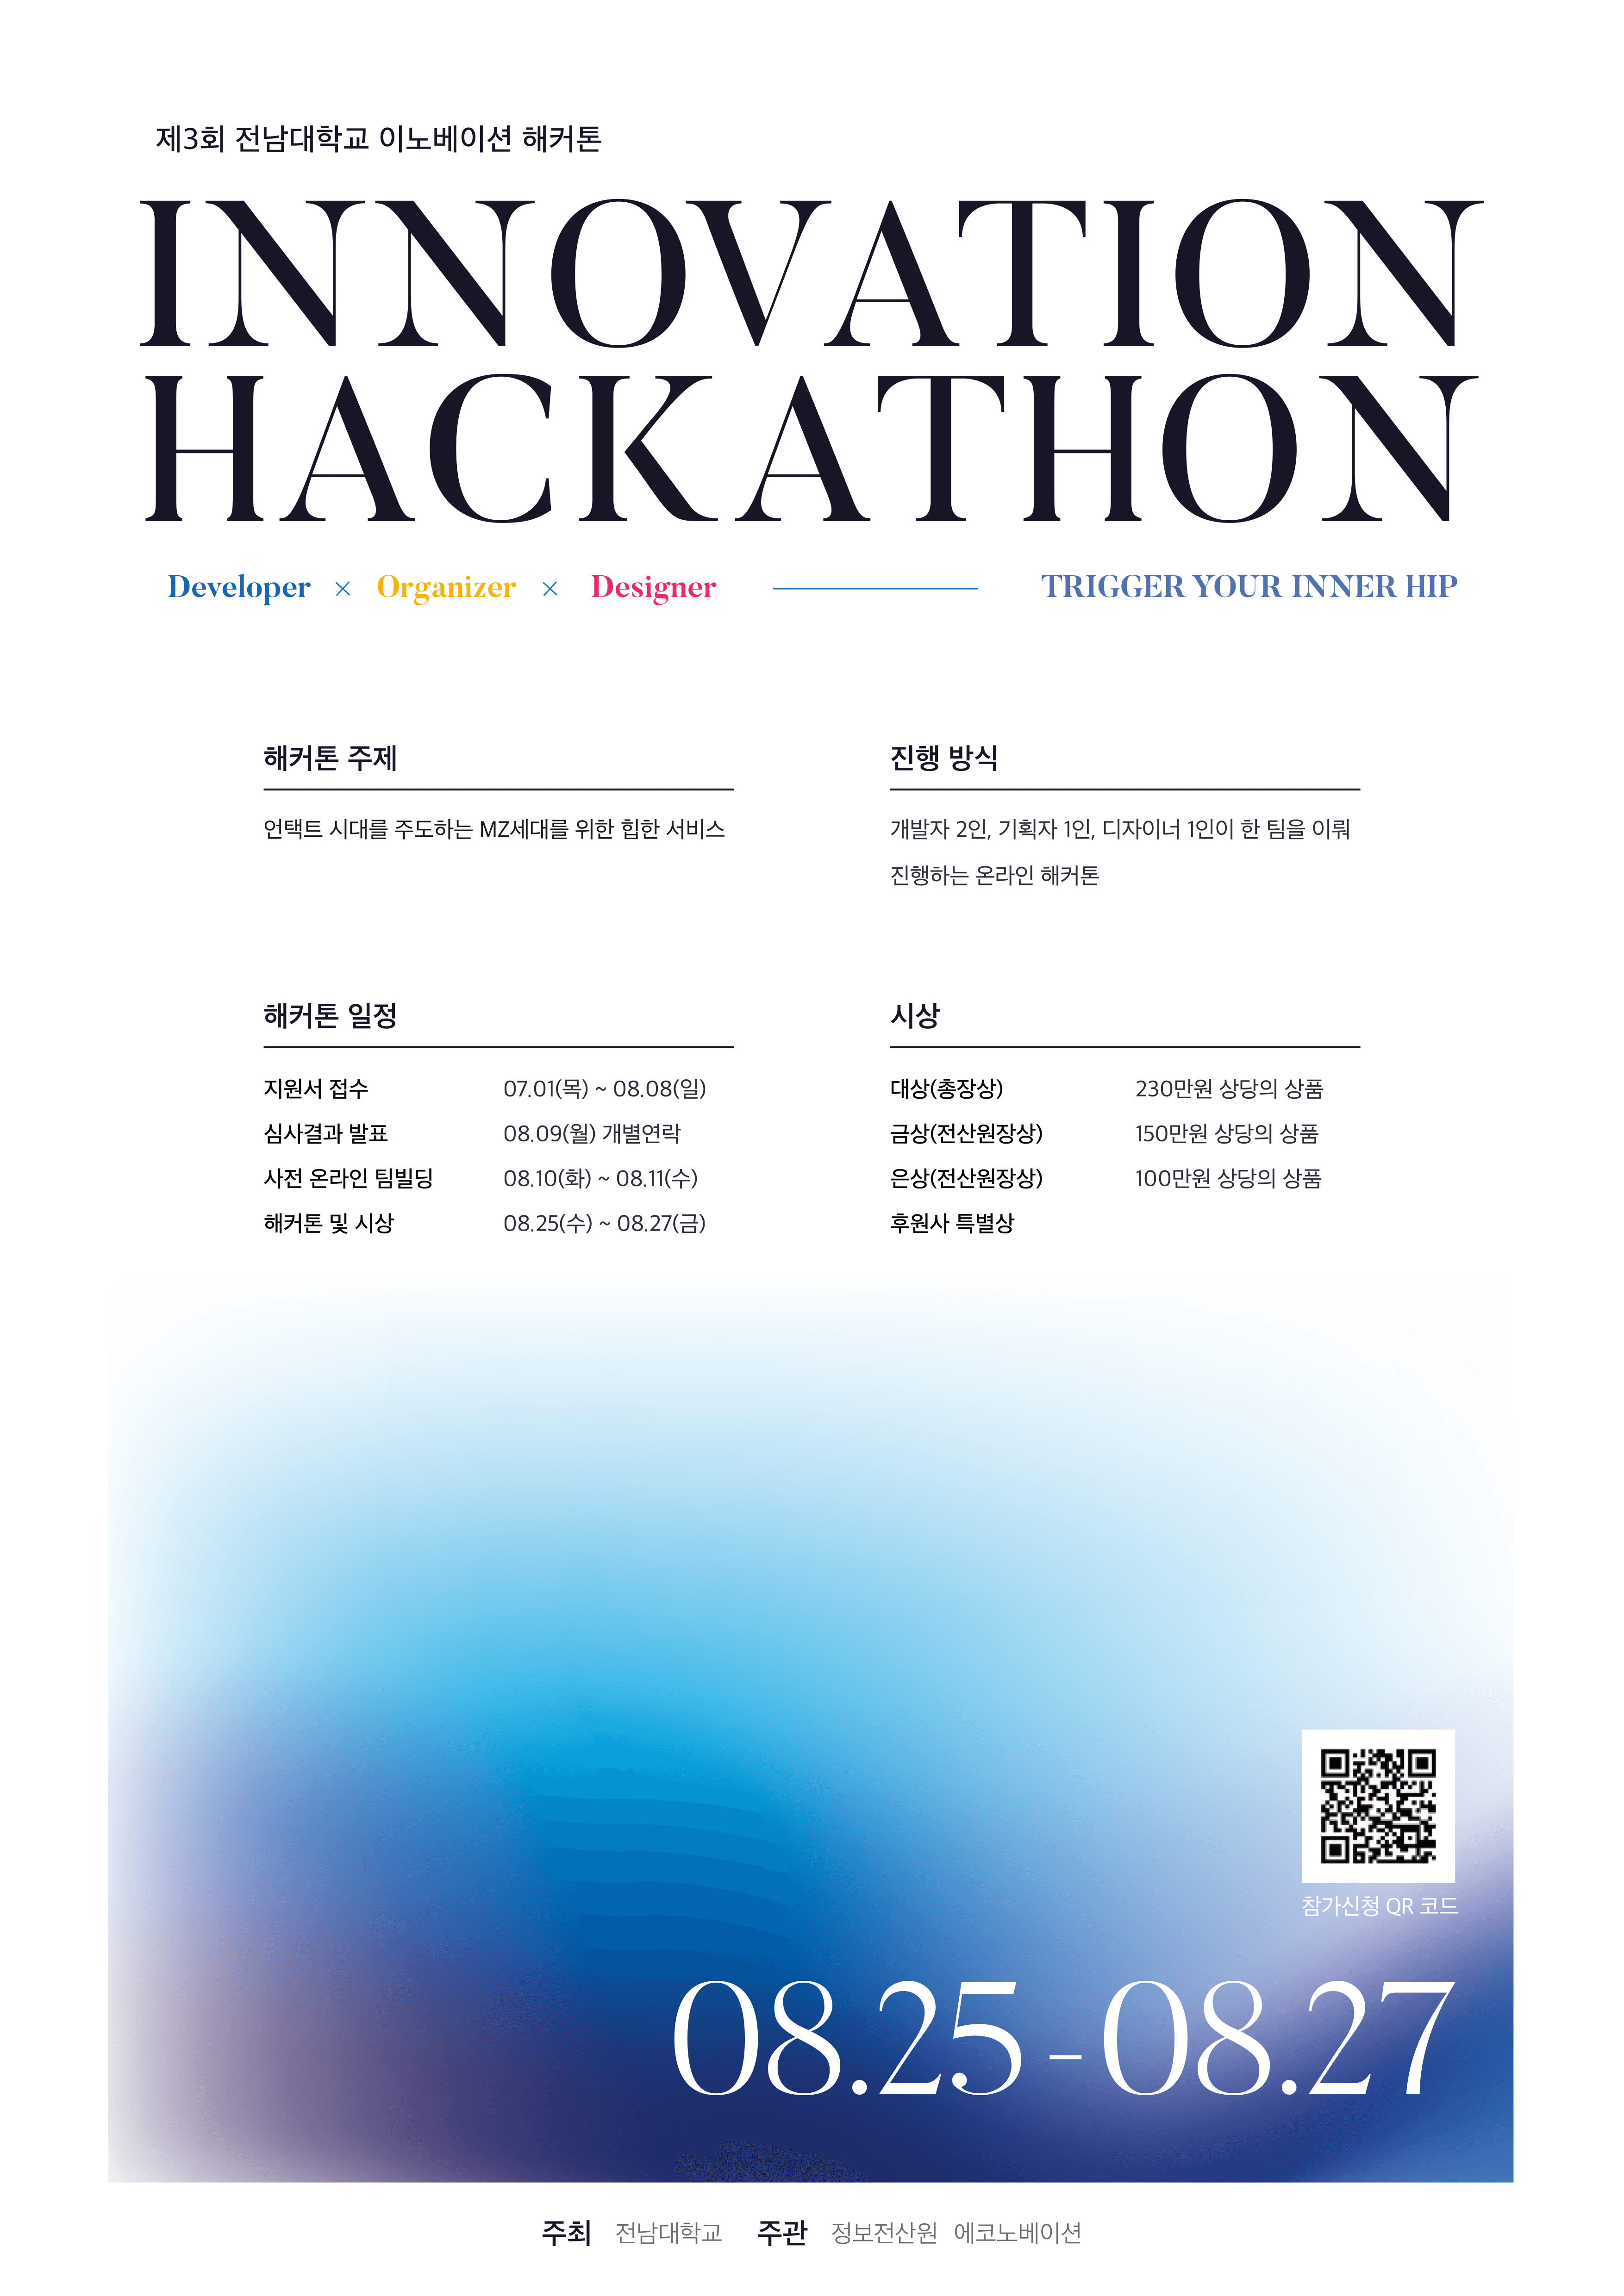 third inovation hackathon